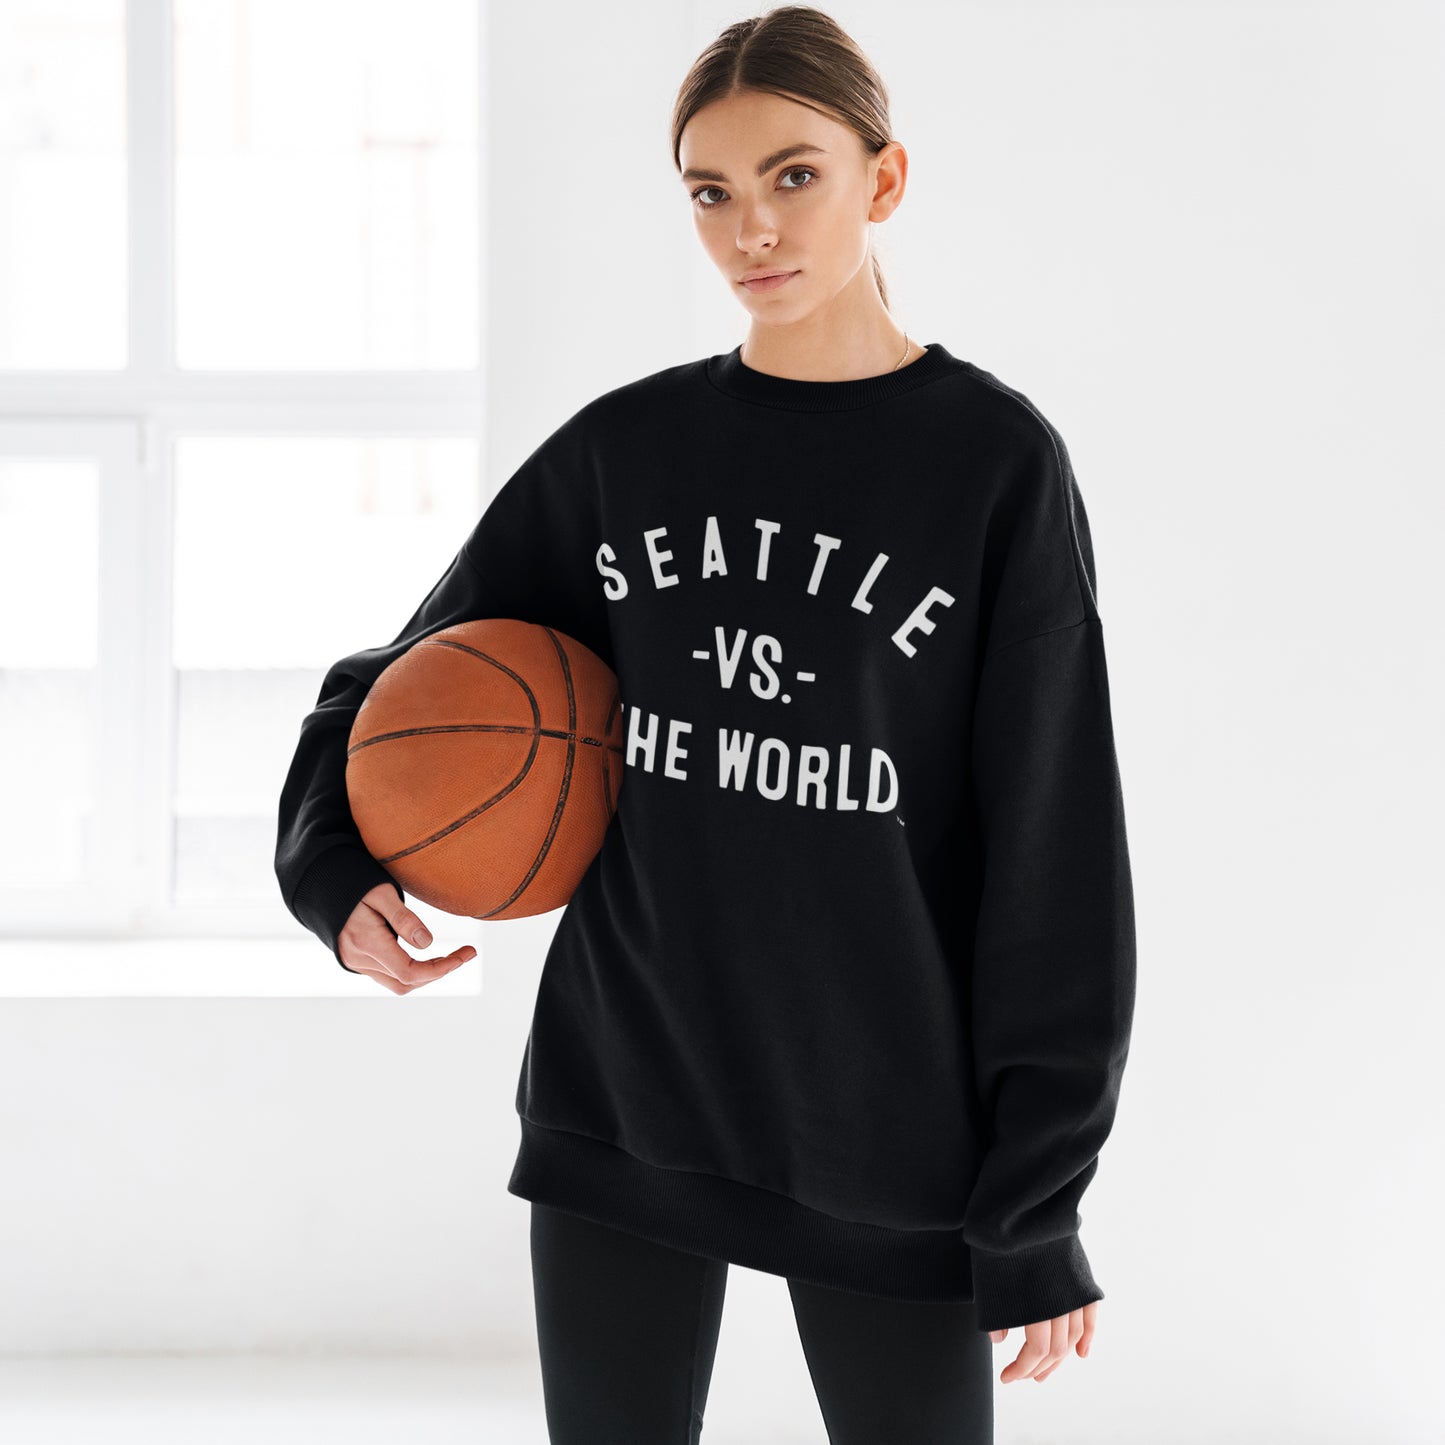 SEATTLE Vs The World Unisex Sweatshirt